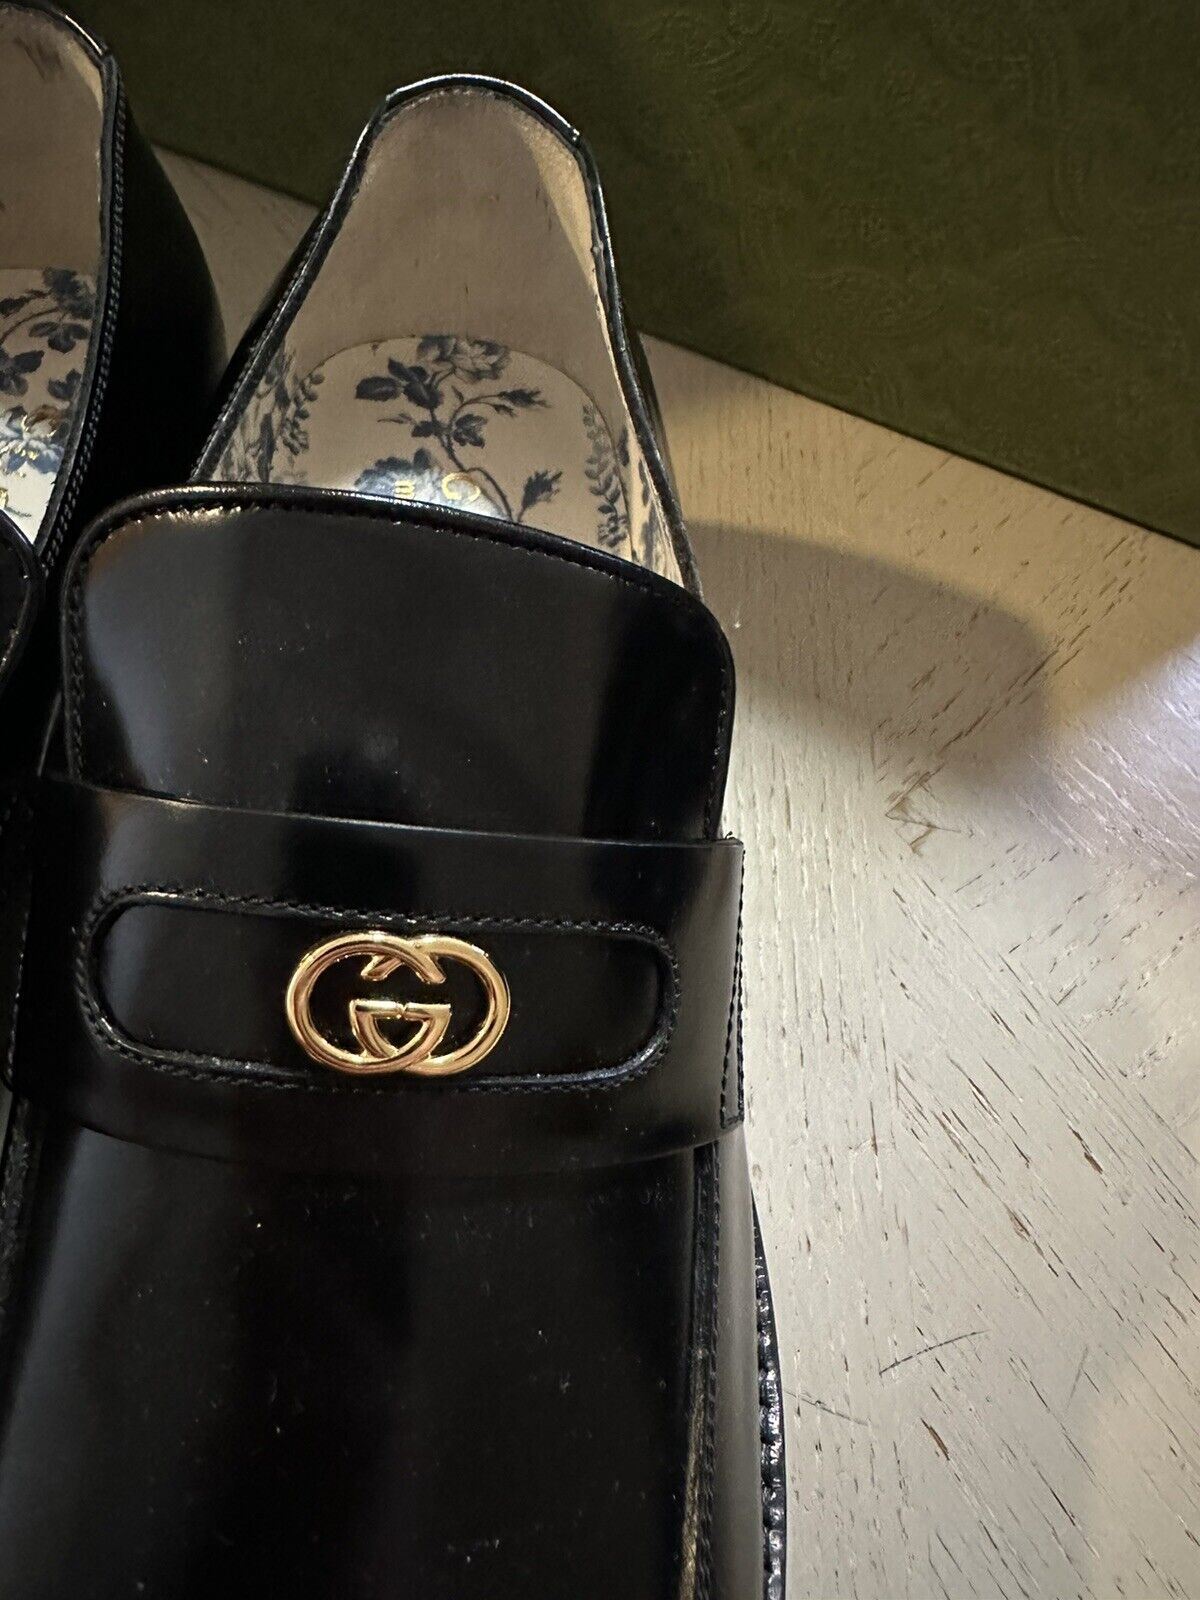 NIB $ 1400 Gucci Herren GG Leder Loafer Mokassin Schuhe Schwarz 7 US ( 6 Gucci )